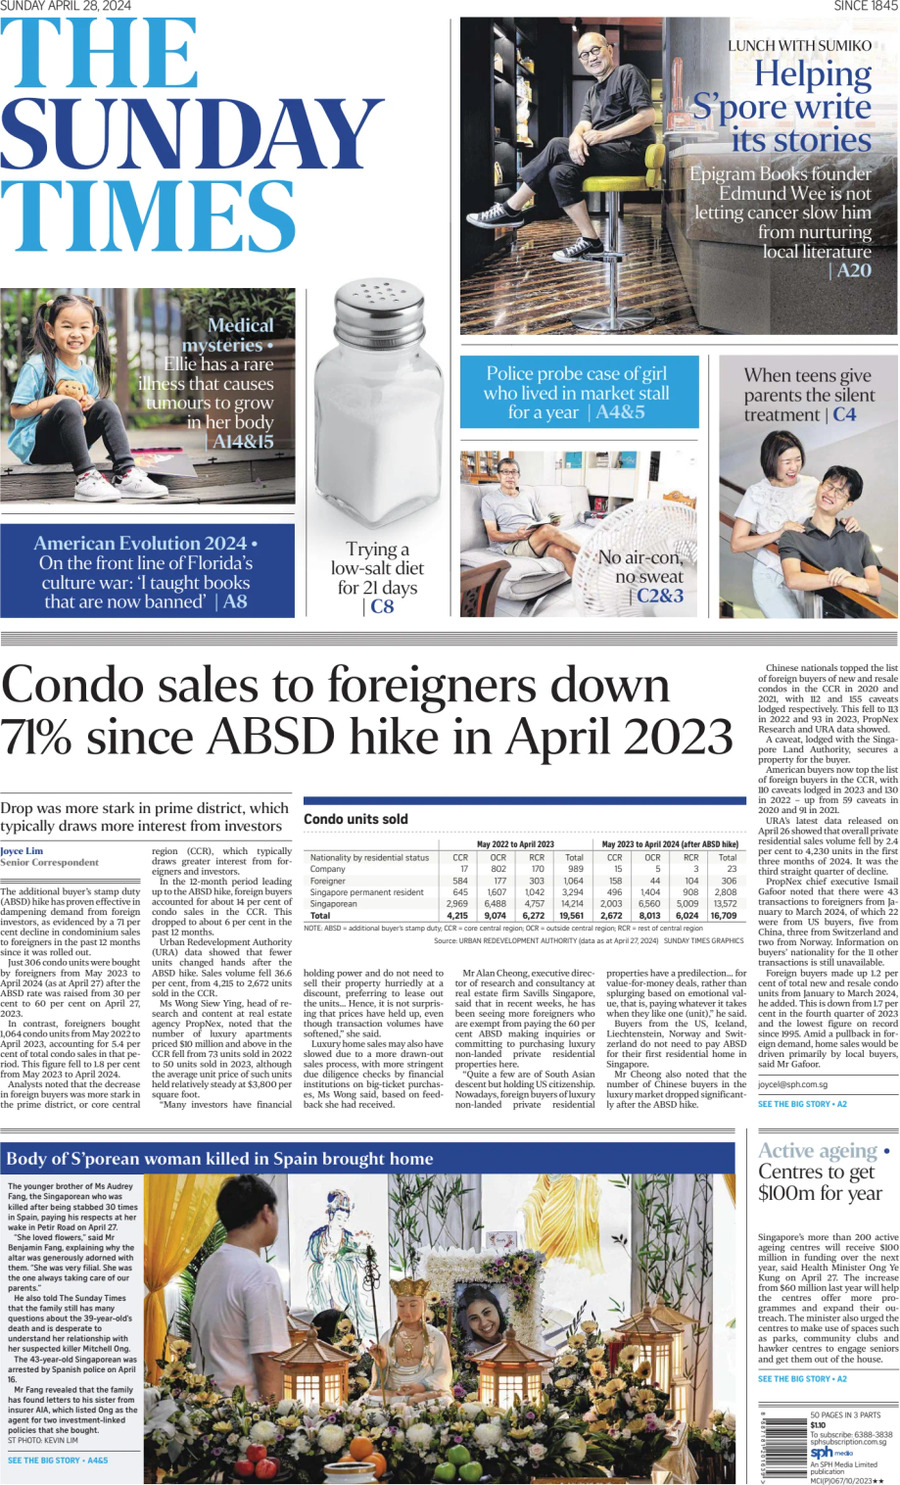 Prima Pagina The Straits Times 28/04/2024